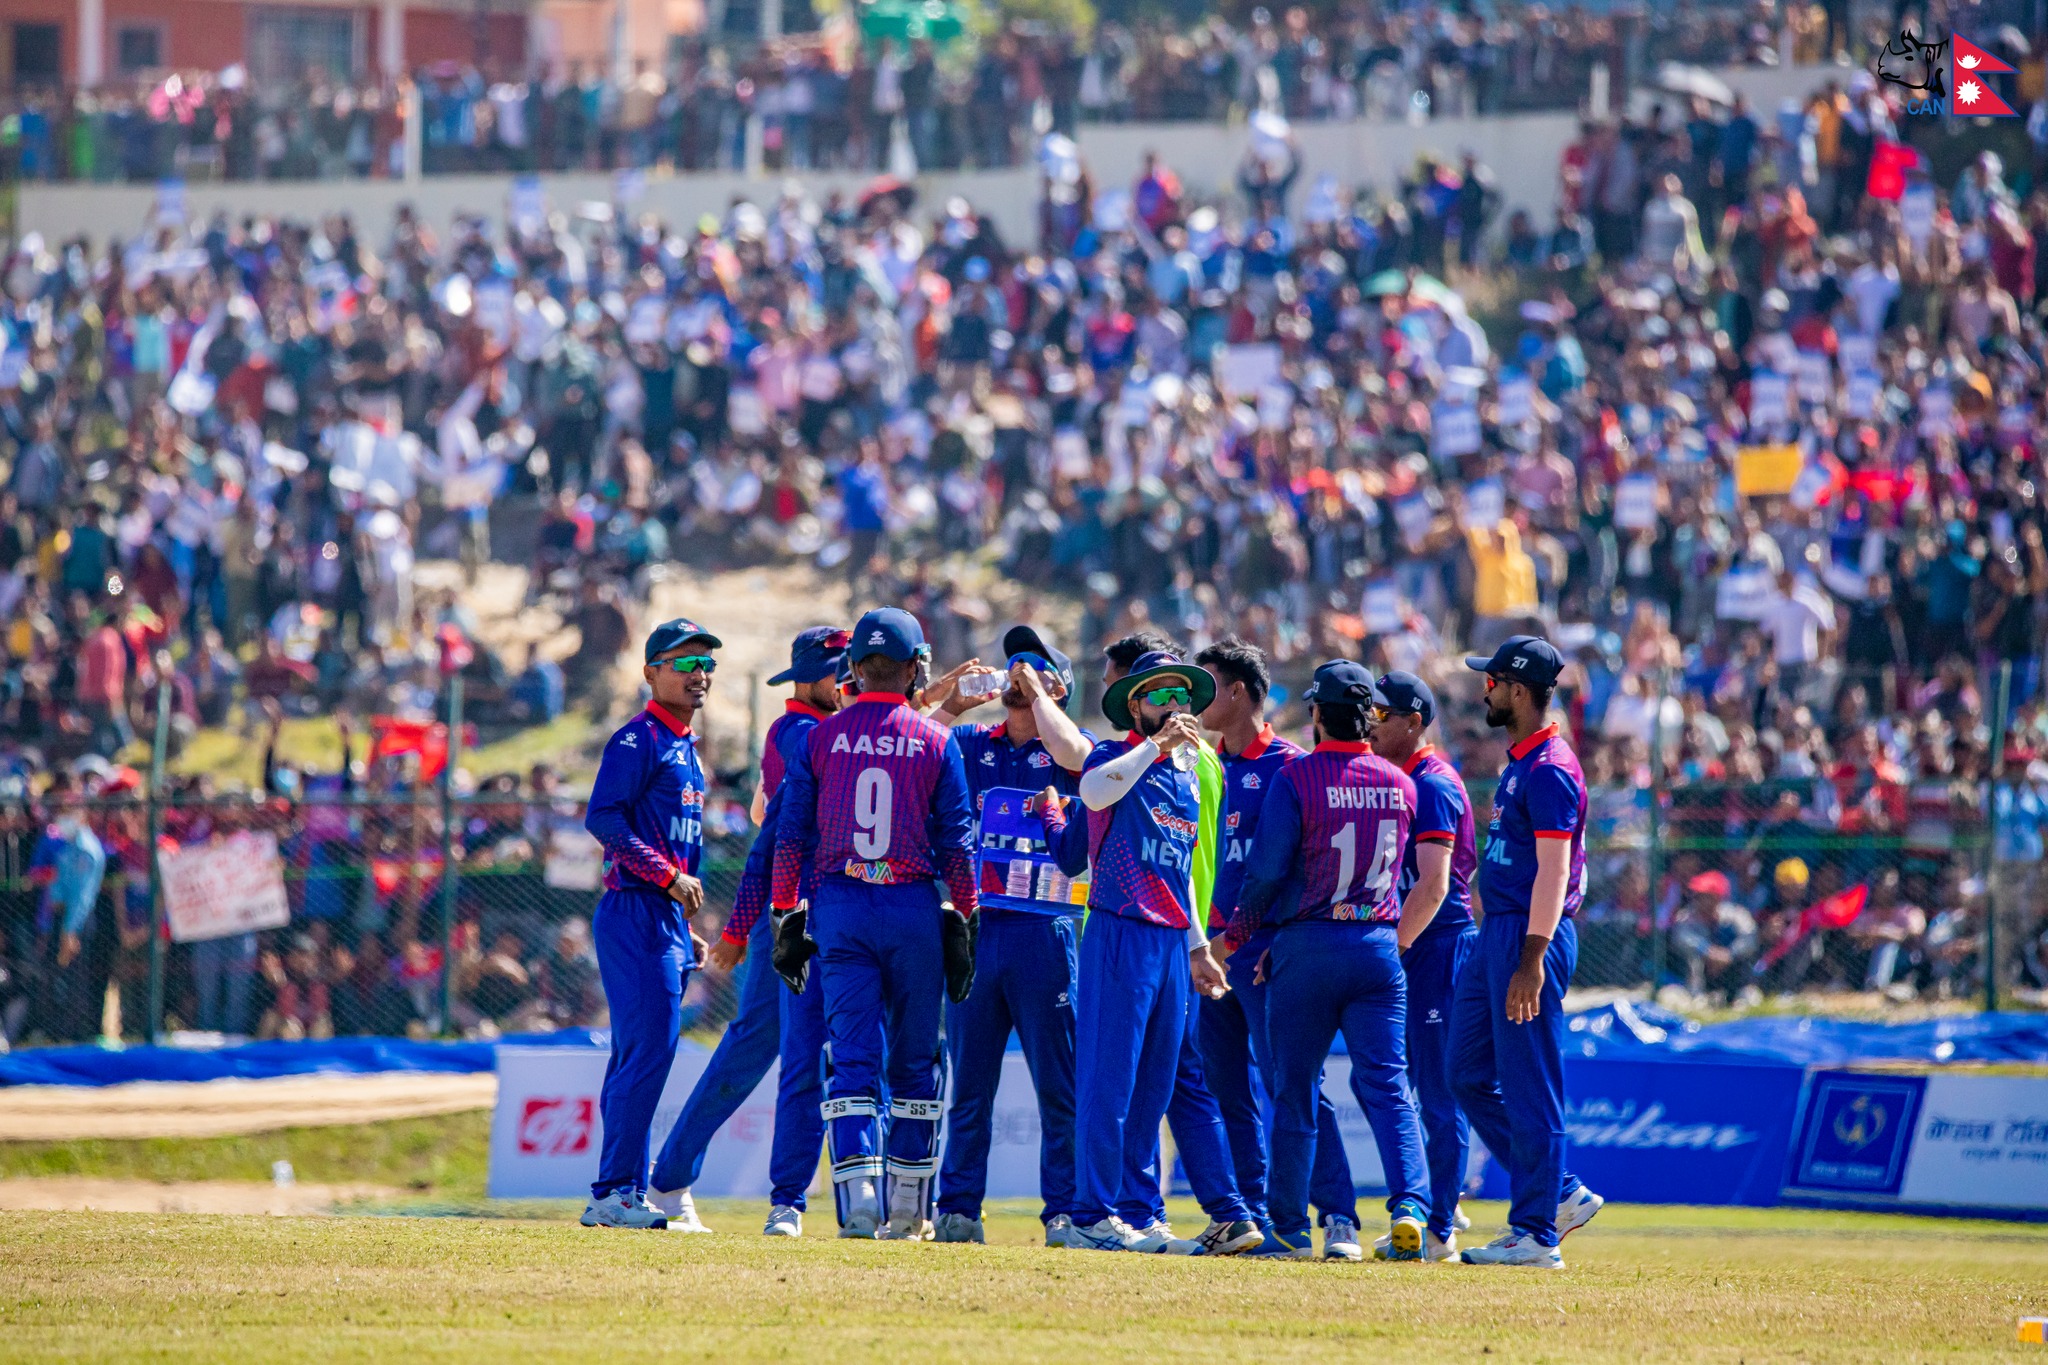 T20 World Cup Qualifier semis Nepal chasing 135run target against UAE